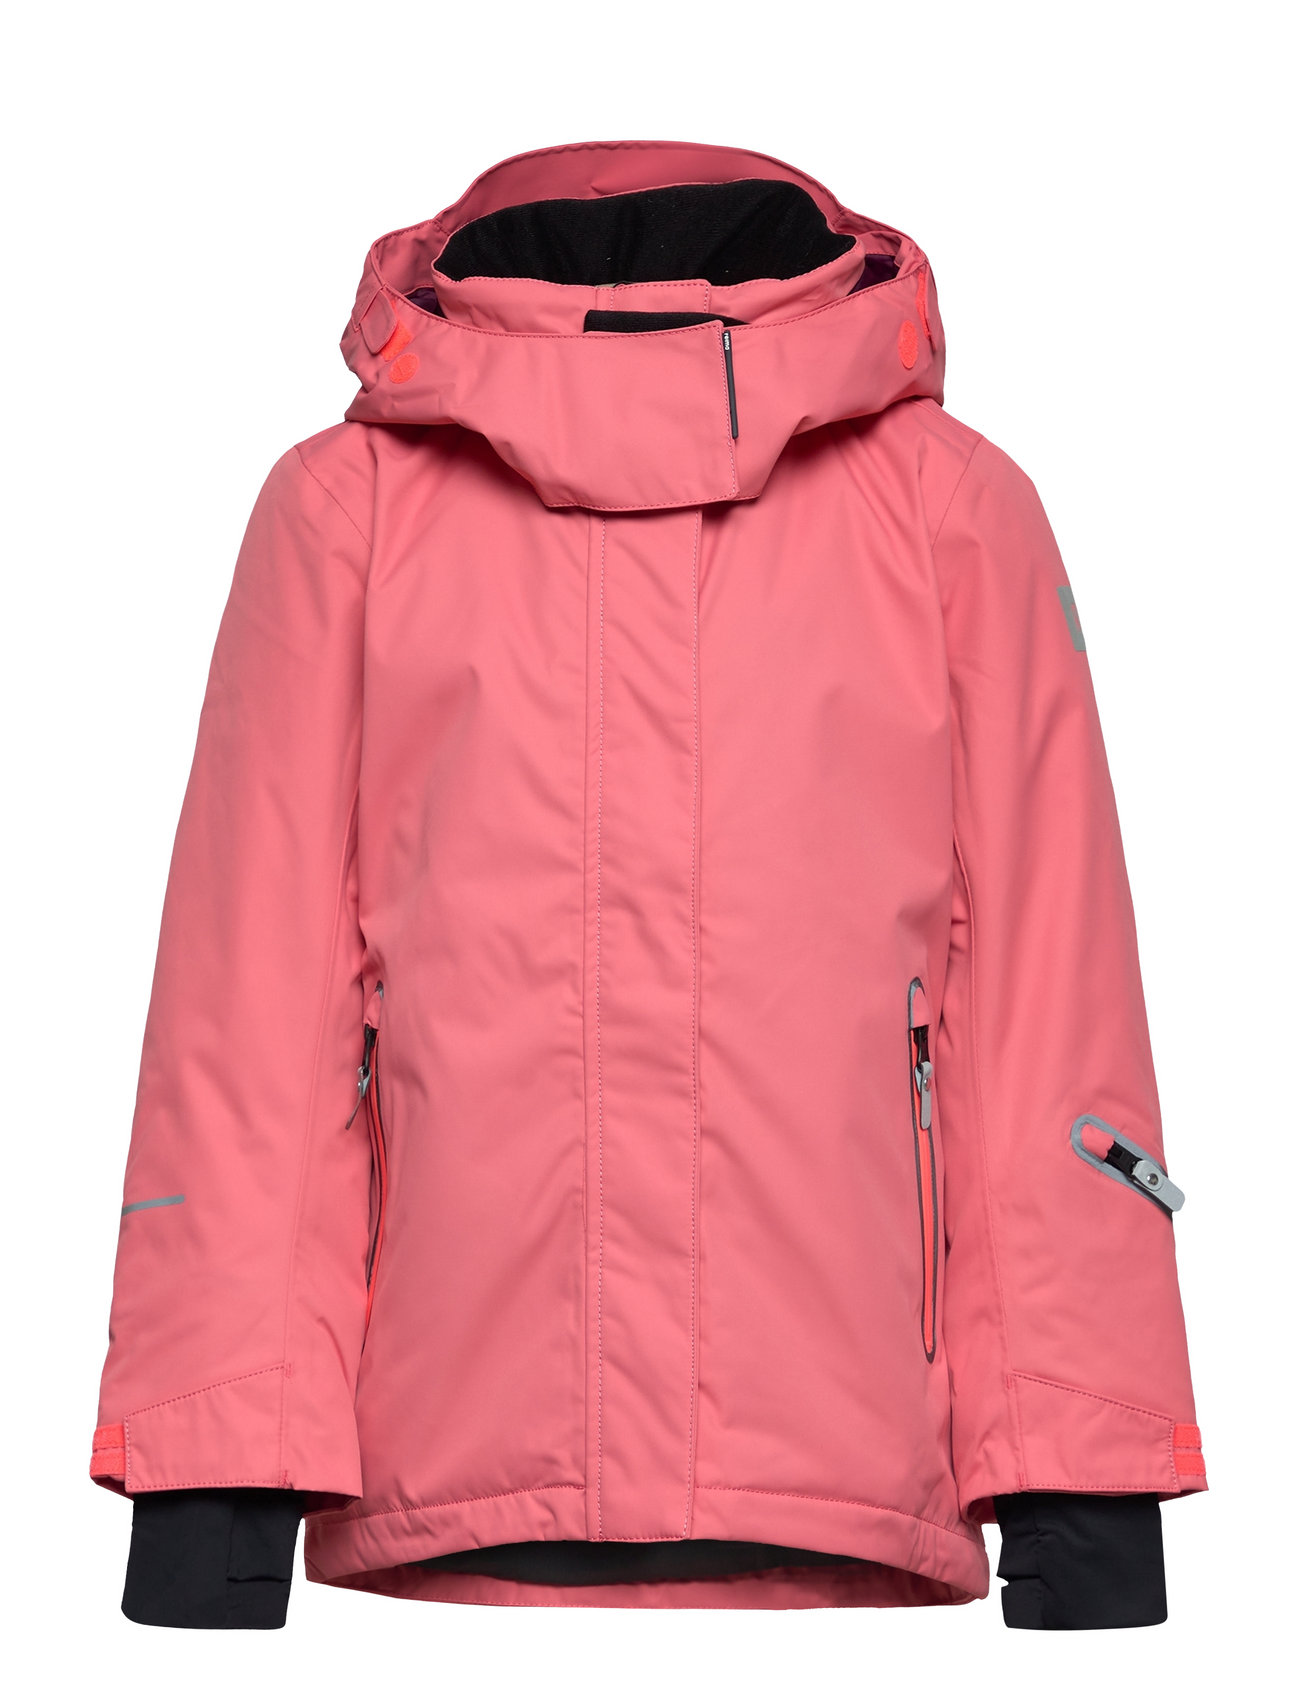 Reima Kids' Reimatec Winter Jacket Kiiruna (Pink Coral), (77.98 ...